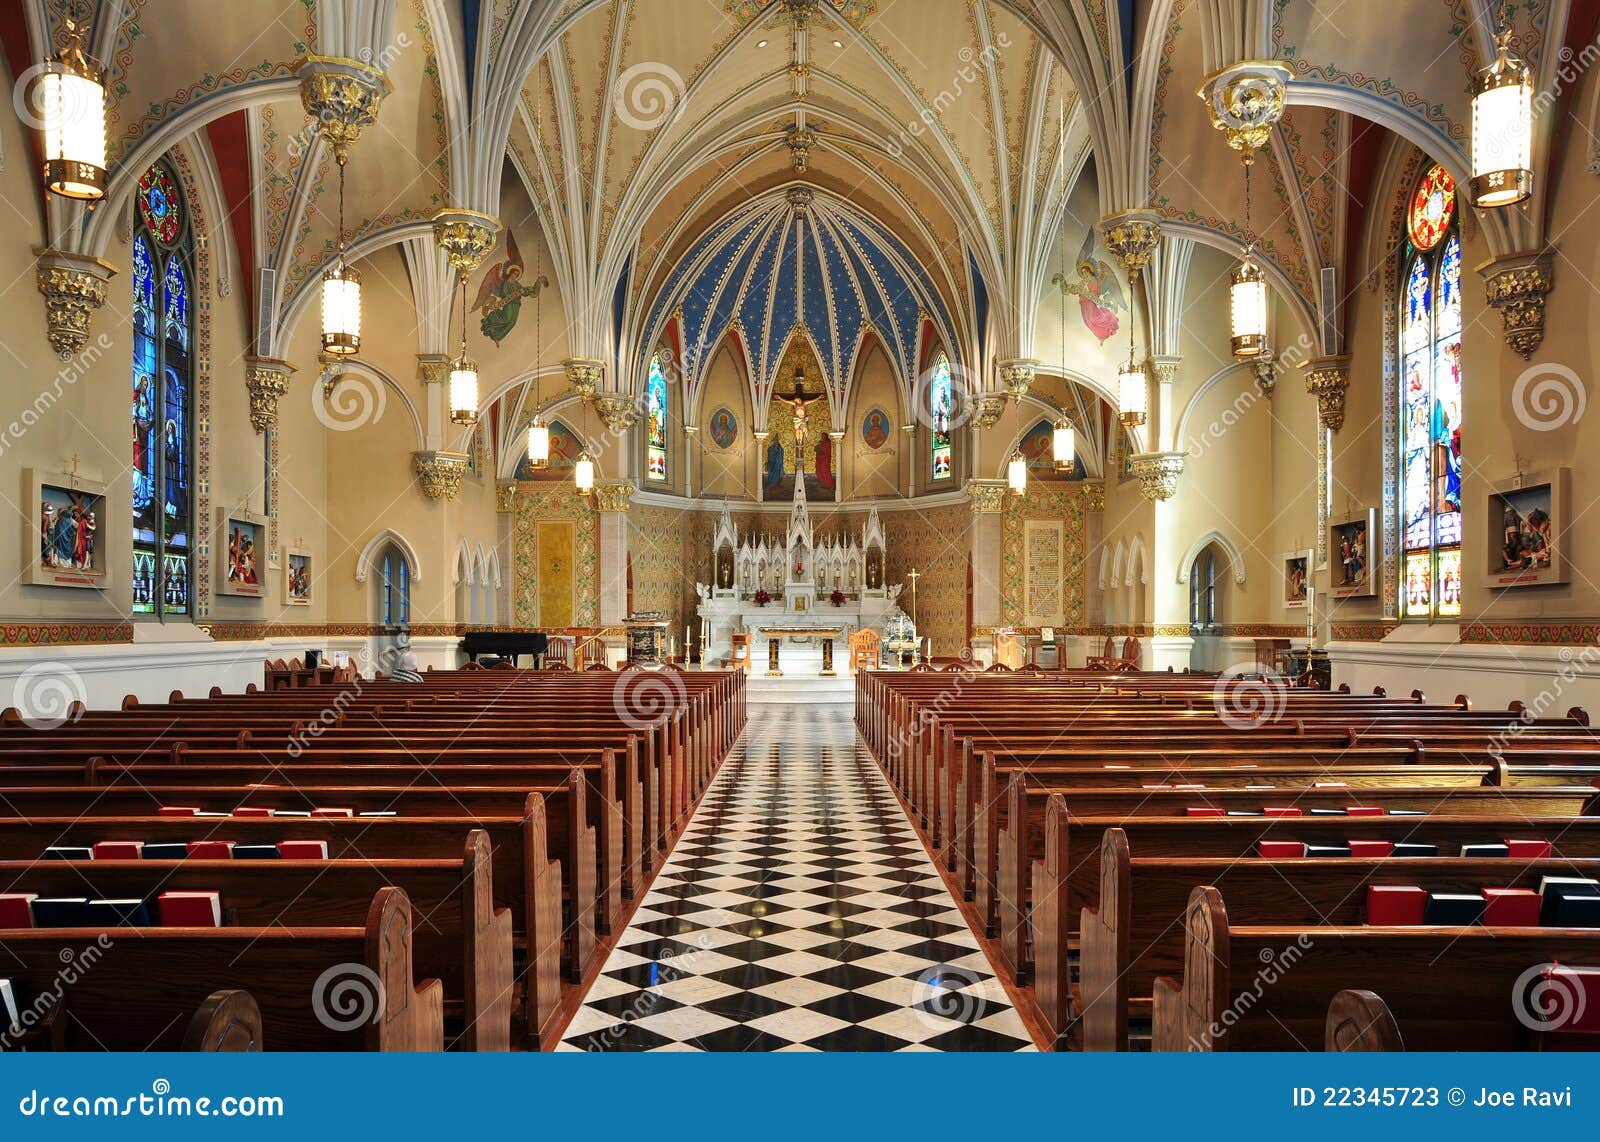 beautiful catholic church interior